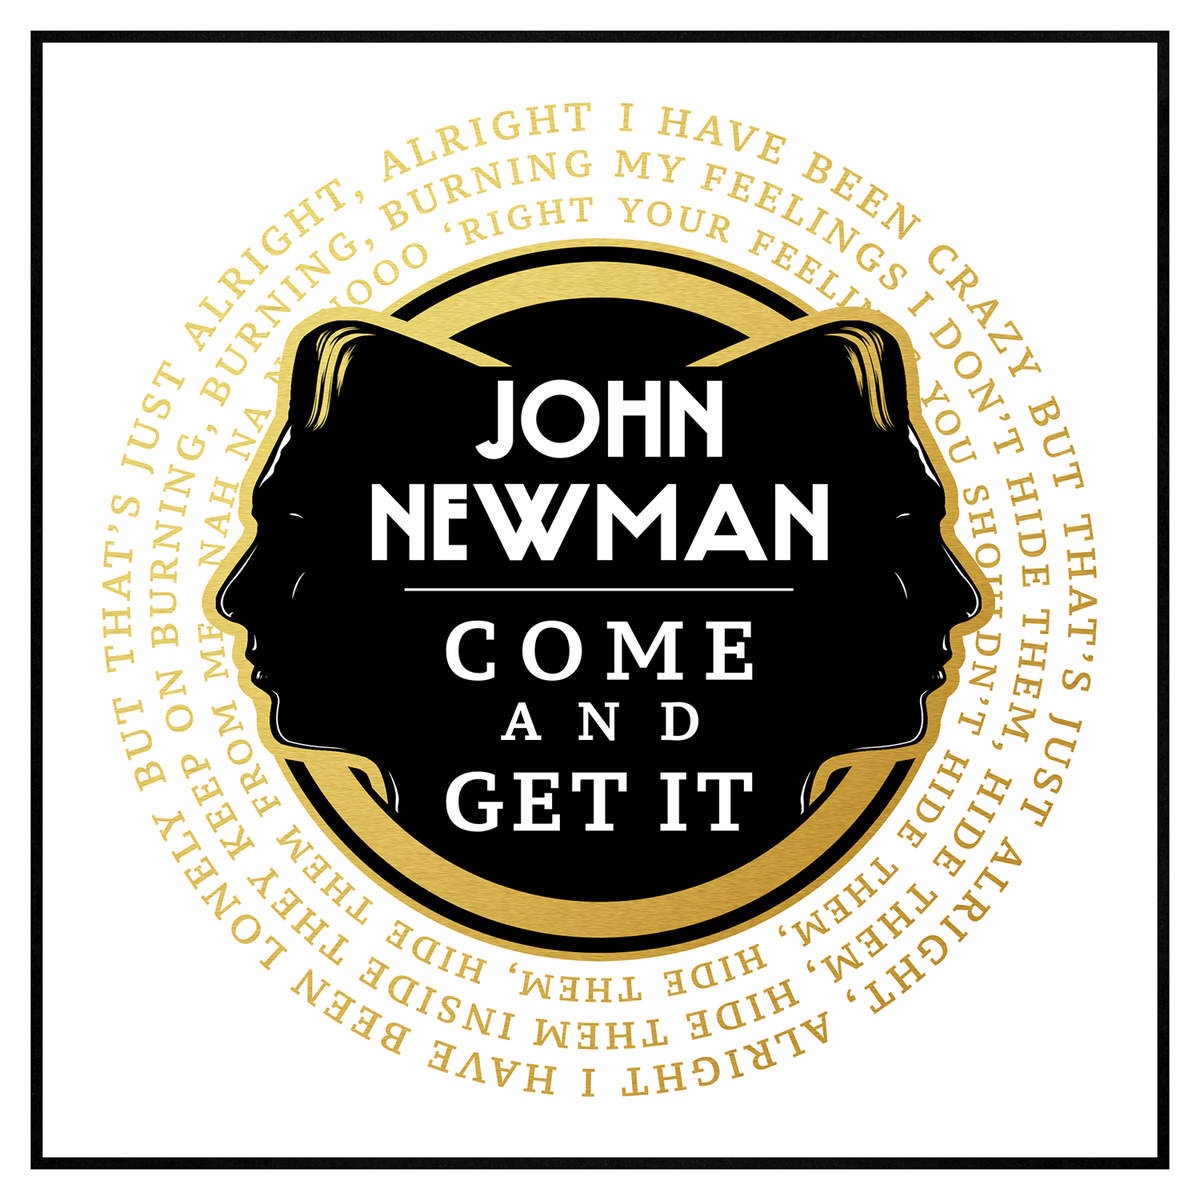 John Newman Come And Get It artwork.jpg